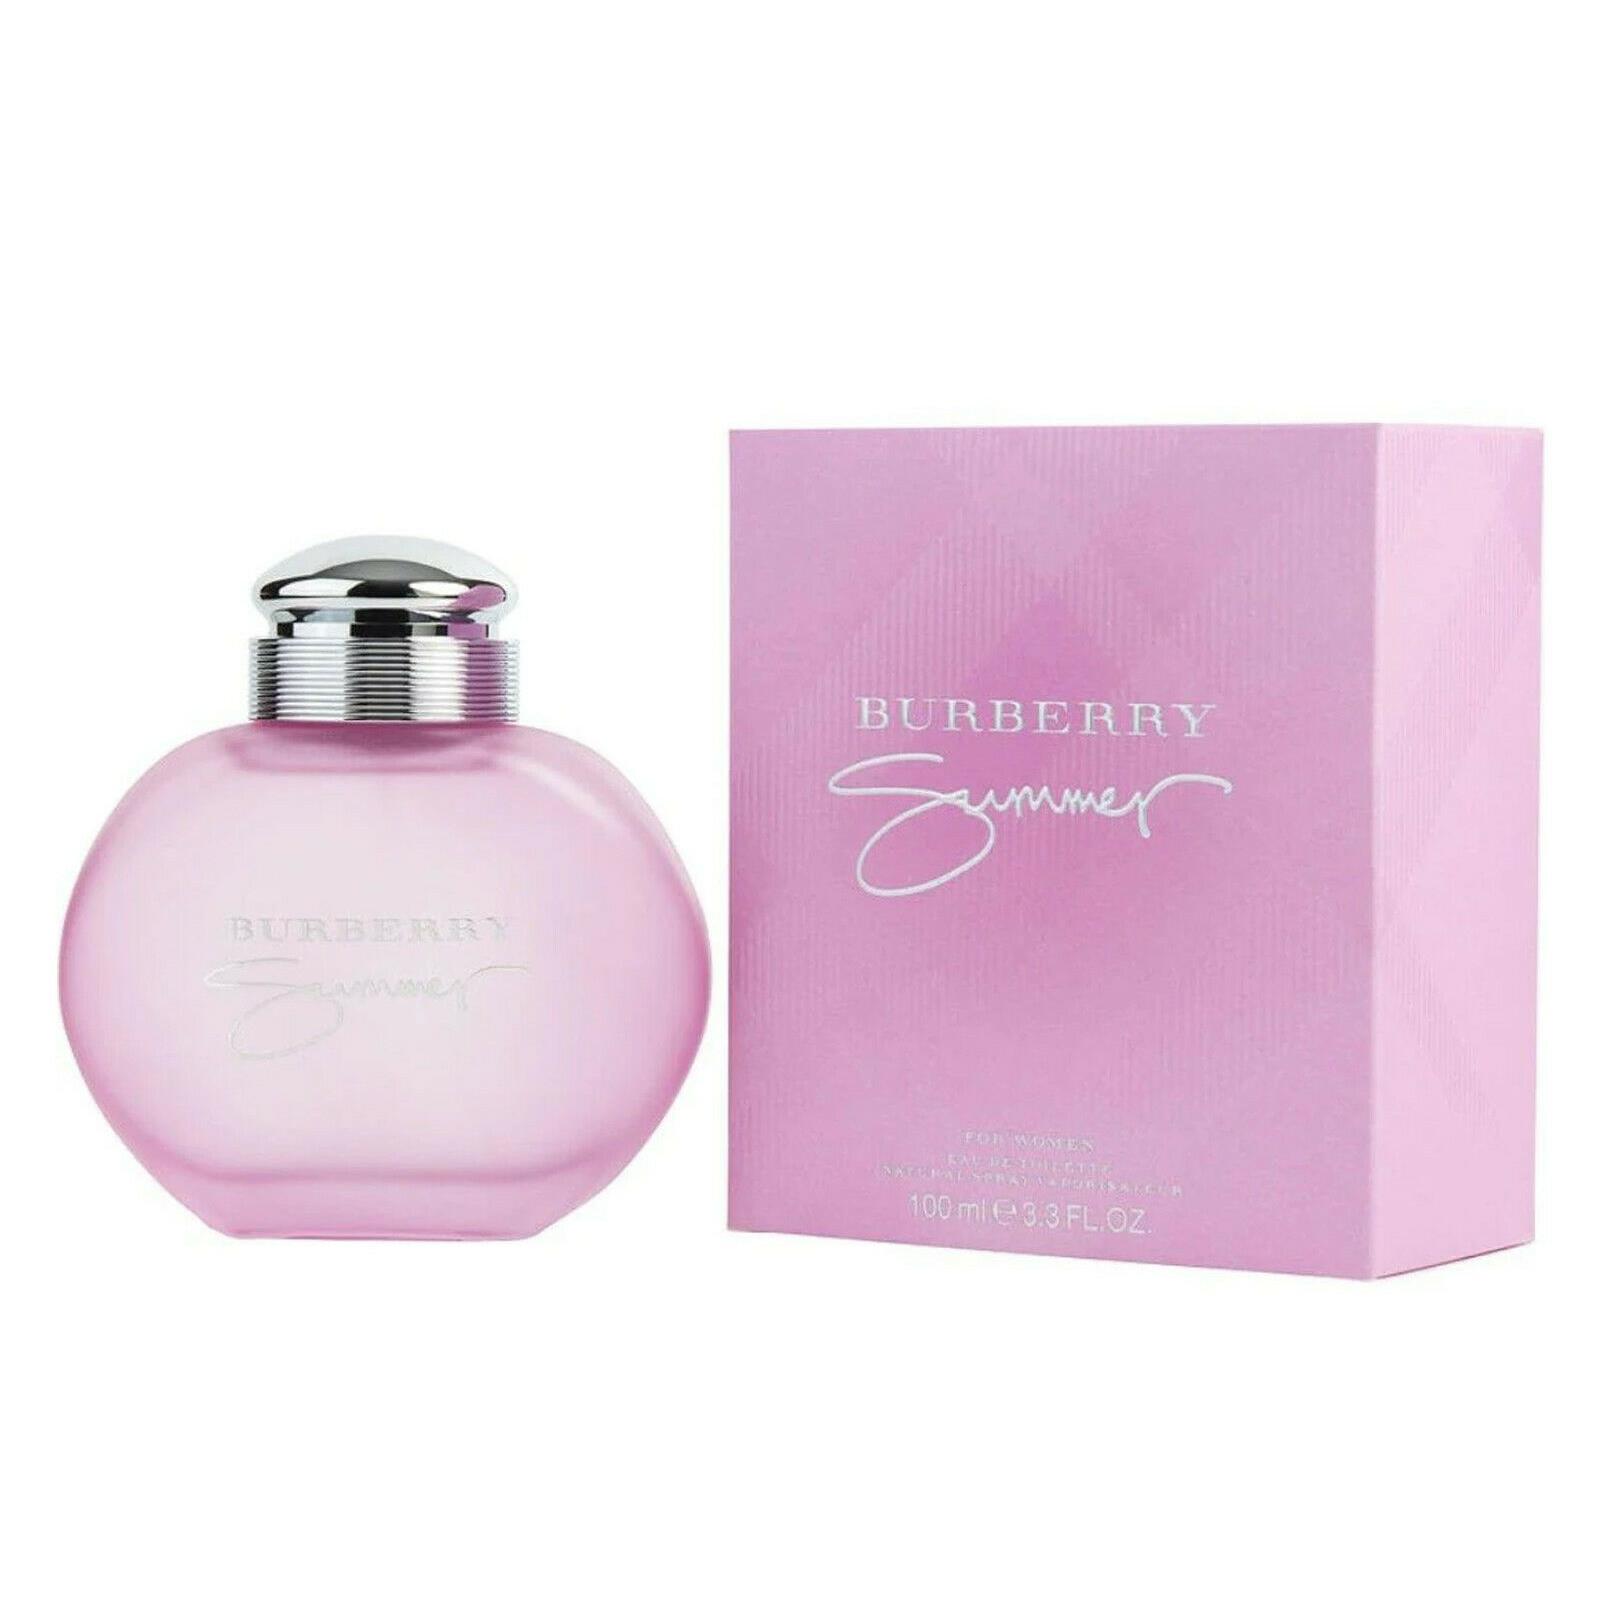 Burberry Summer Perfume For Women by Burberry 3.3 oz / 100 ml Edt Spray